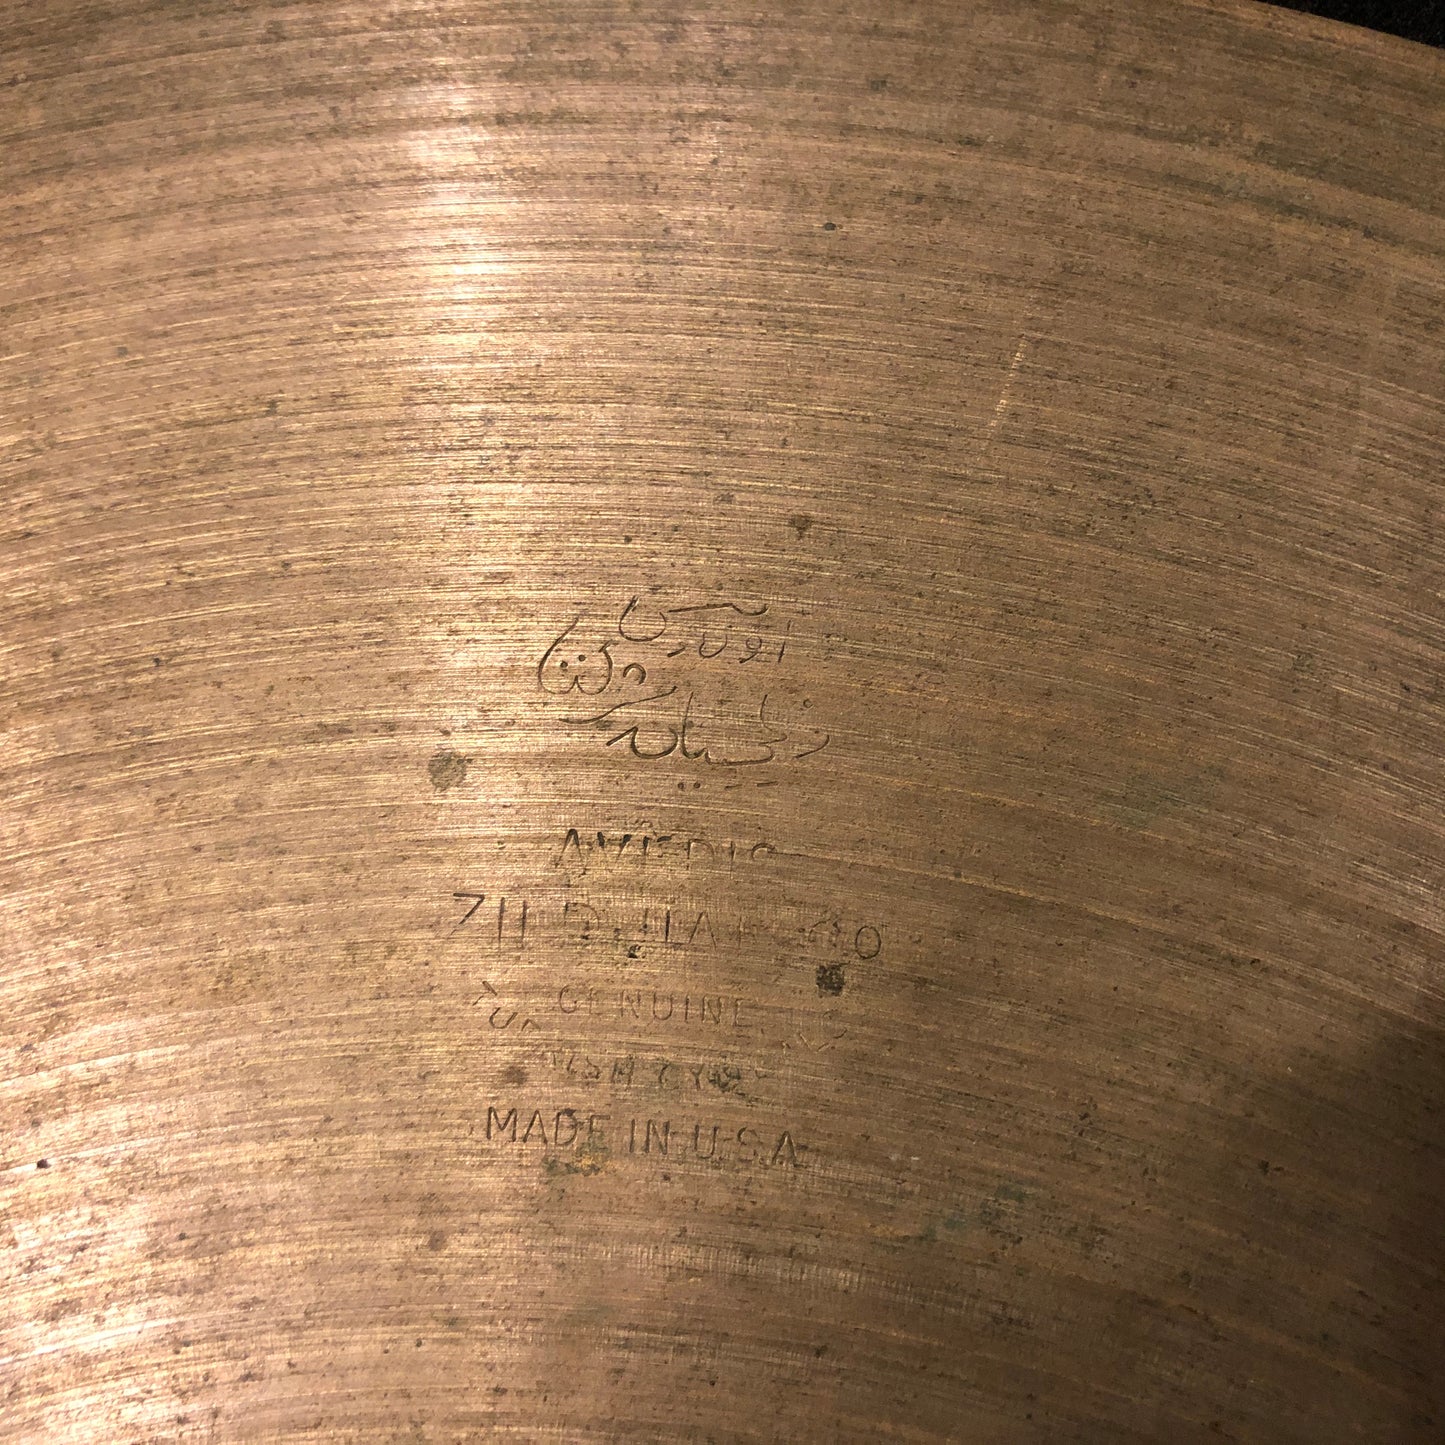 14" Zildjian A 1977-82 New Beat Hi-Hat Bottom Single Cymbal 1296g #444